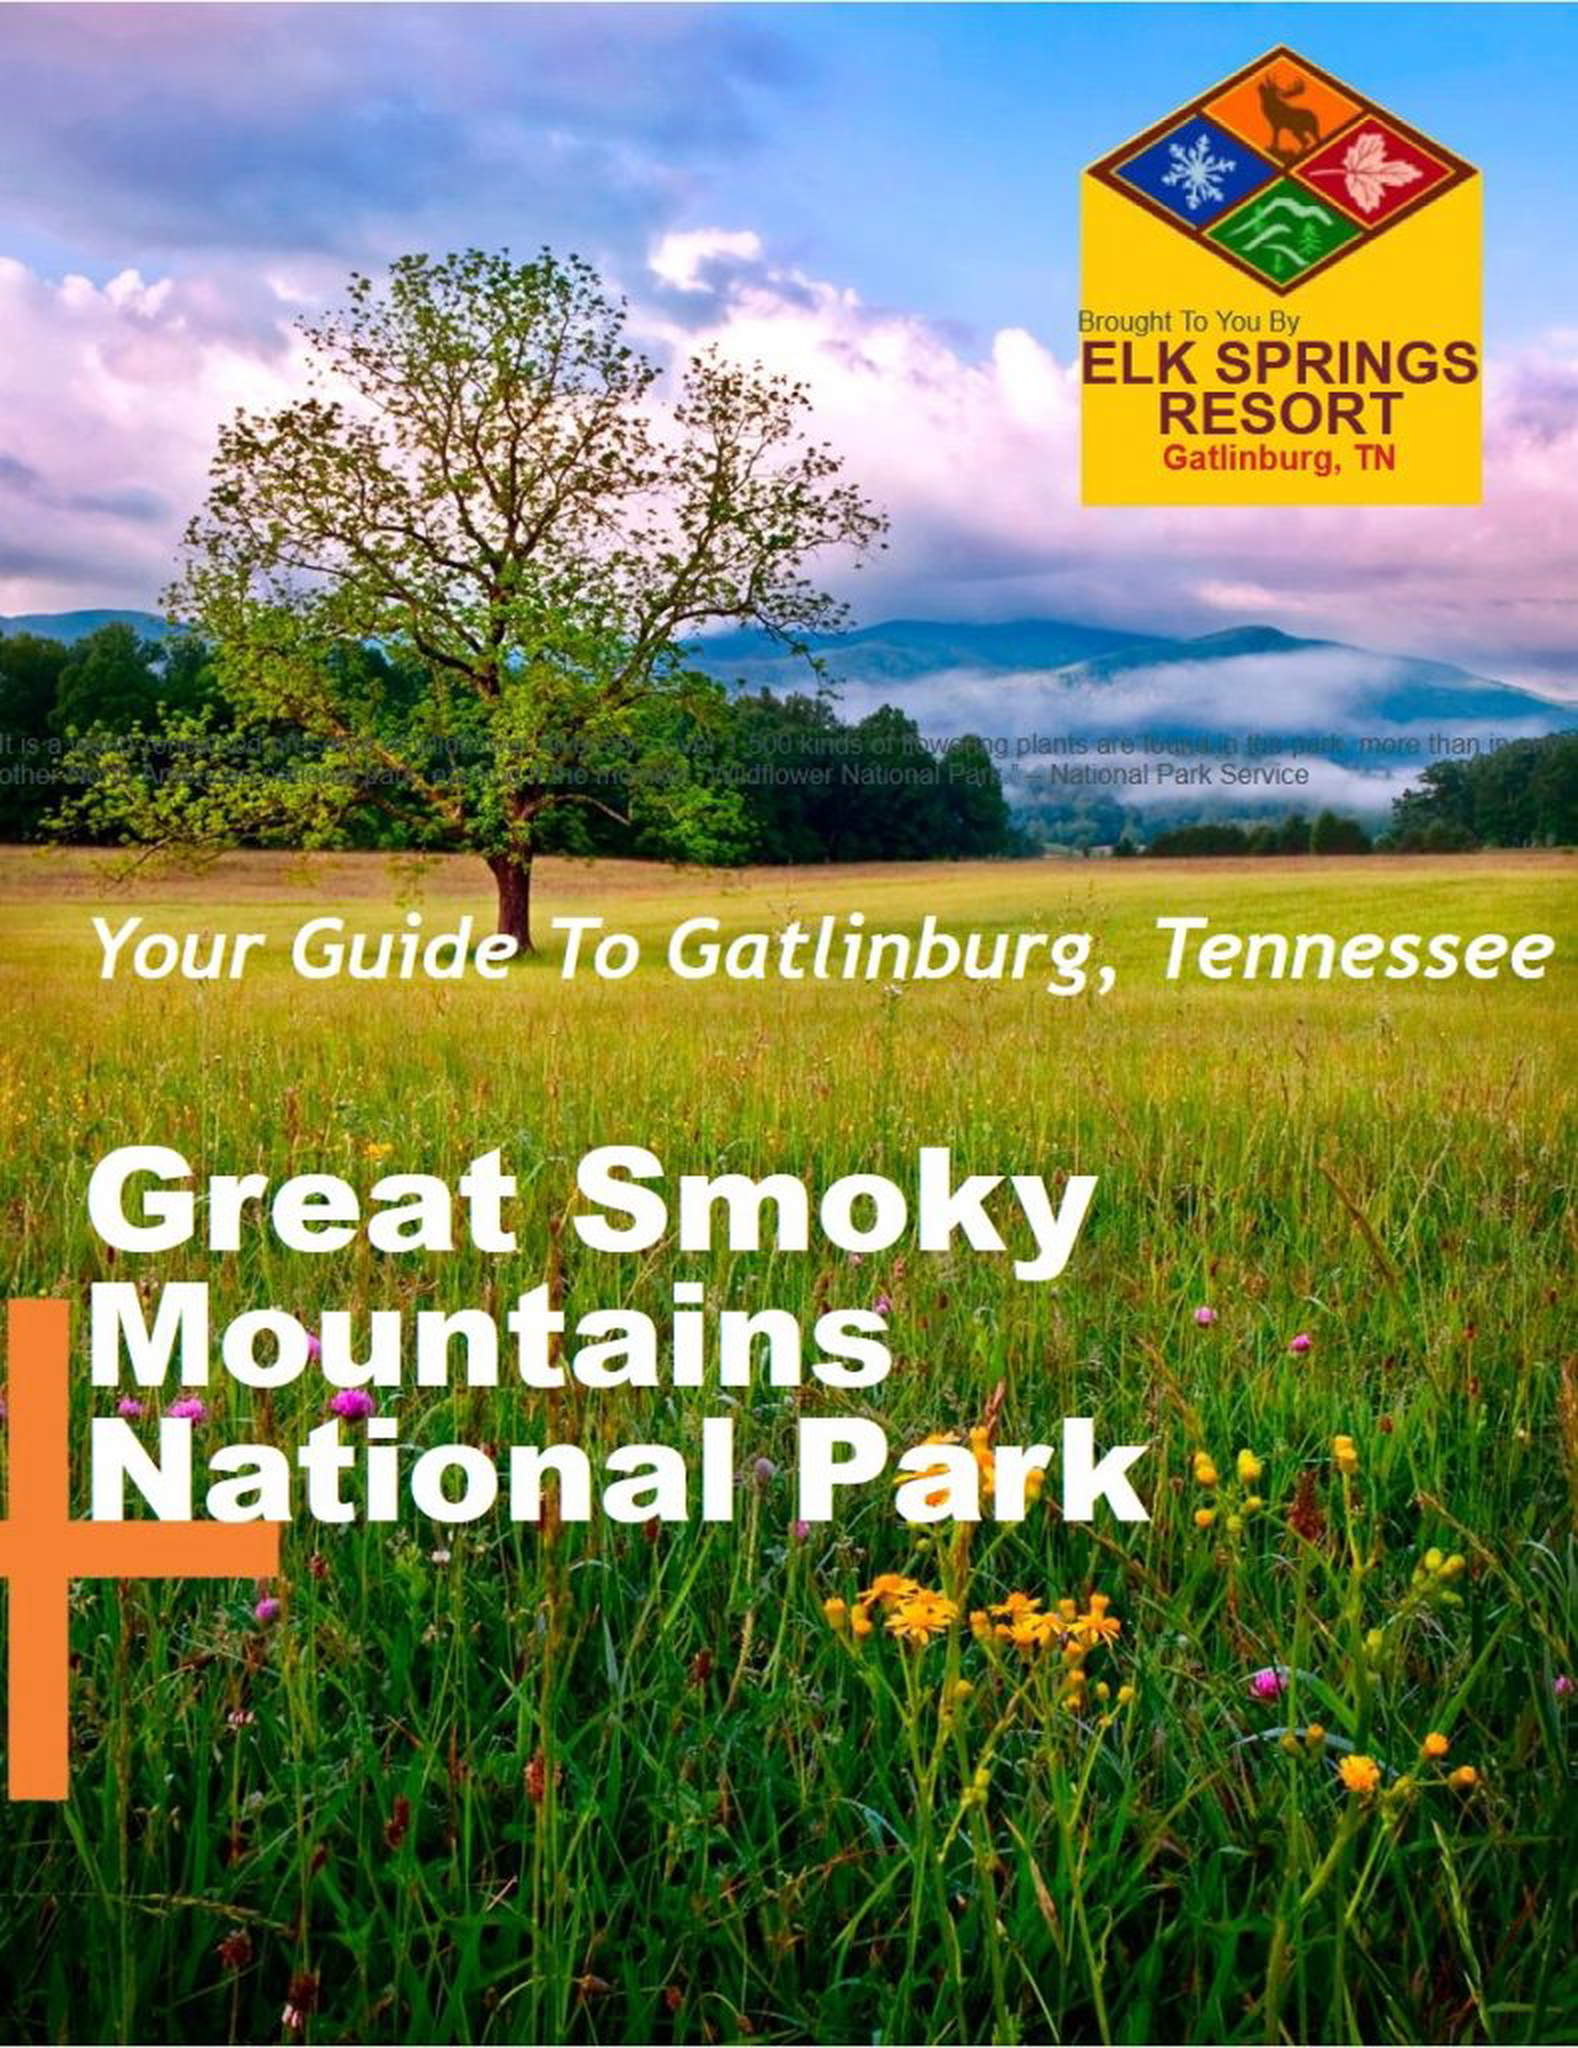 Gatlinburg Tennessee Travel Guide